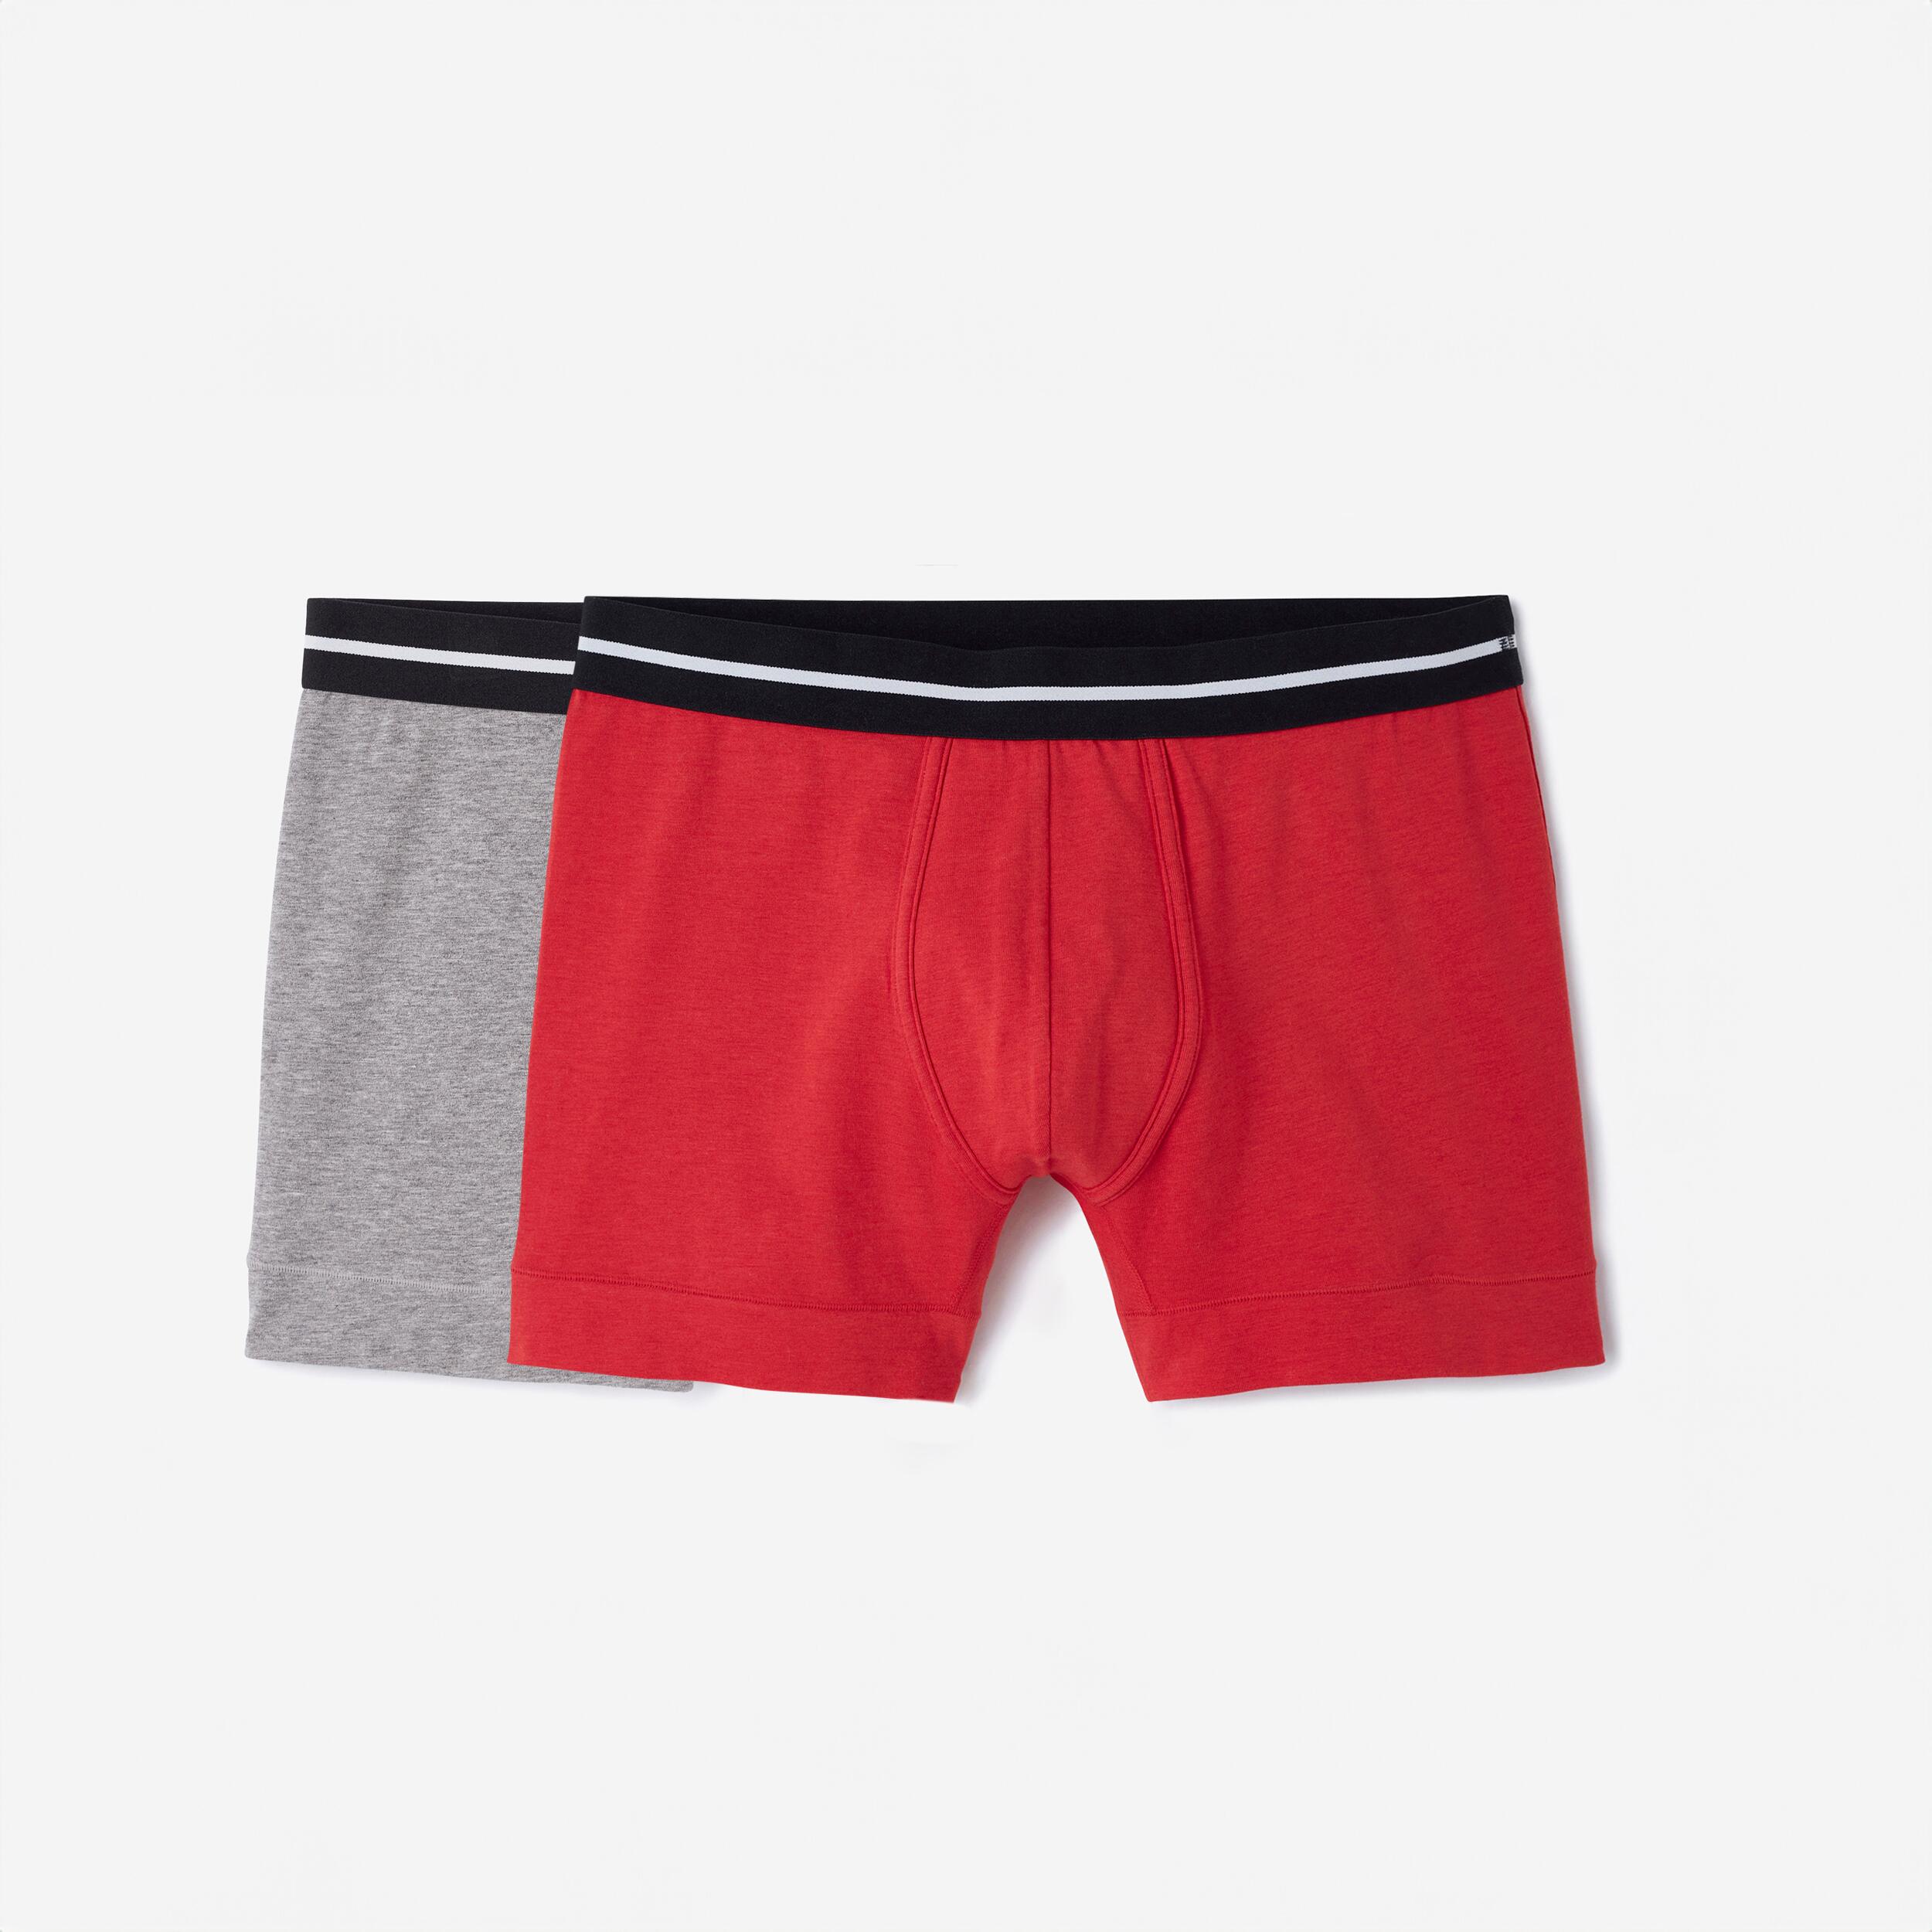 Becharm Men's Boxer Briefs Shorts Stripe Male Panties Set Nylon